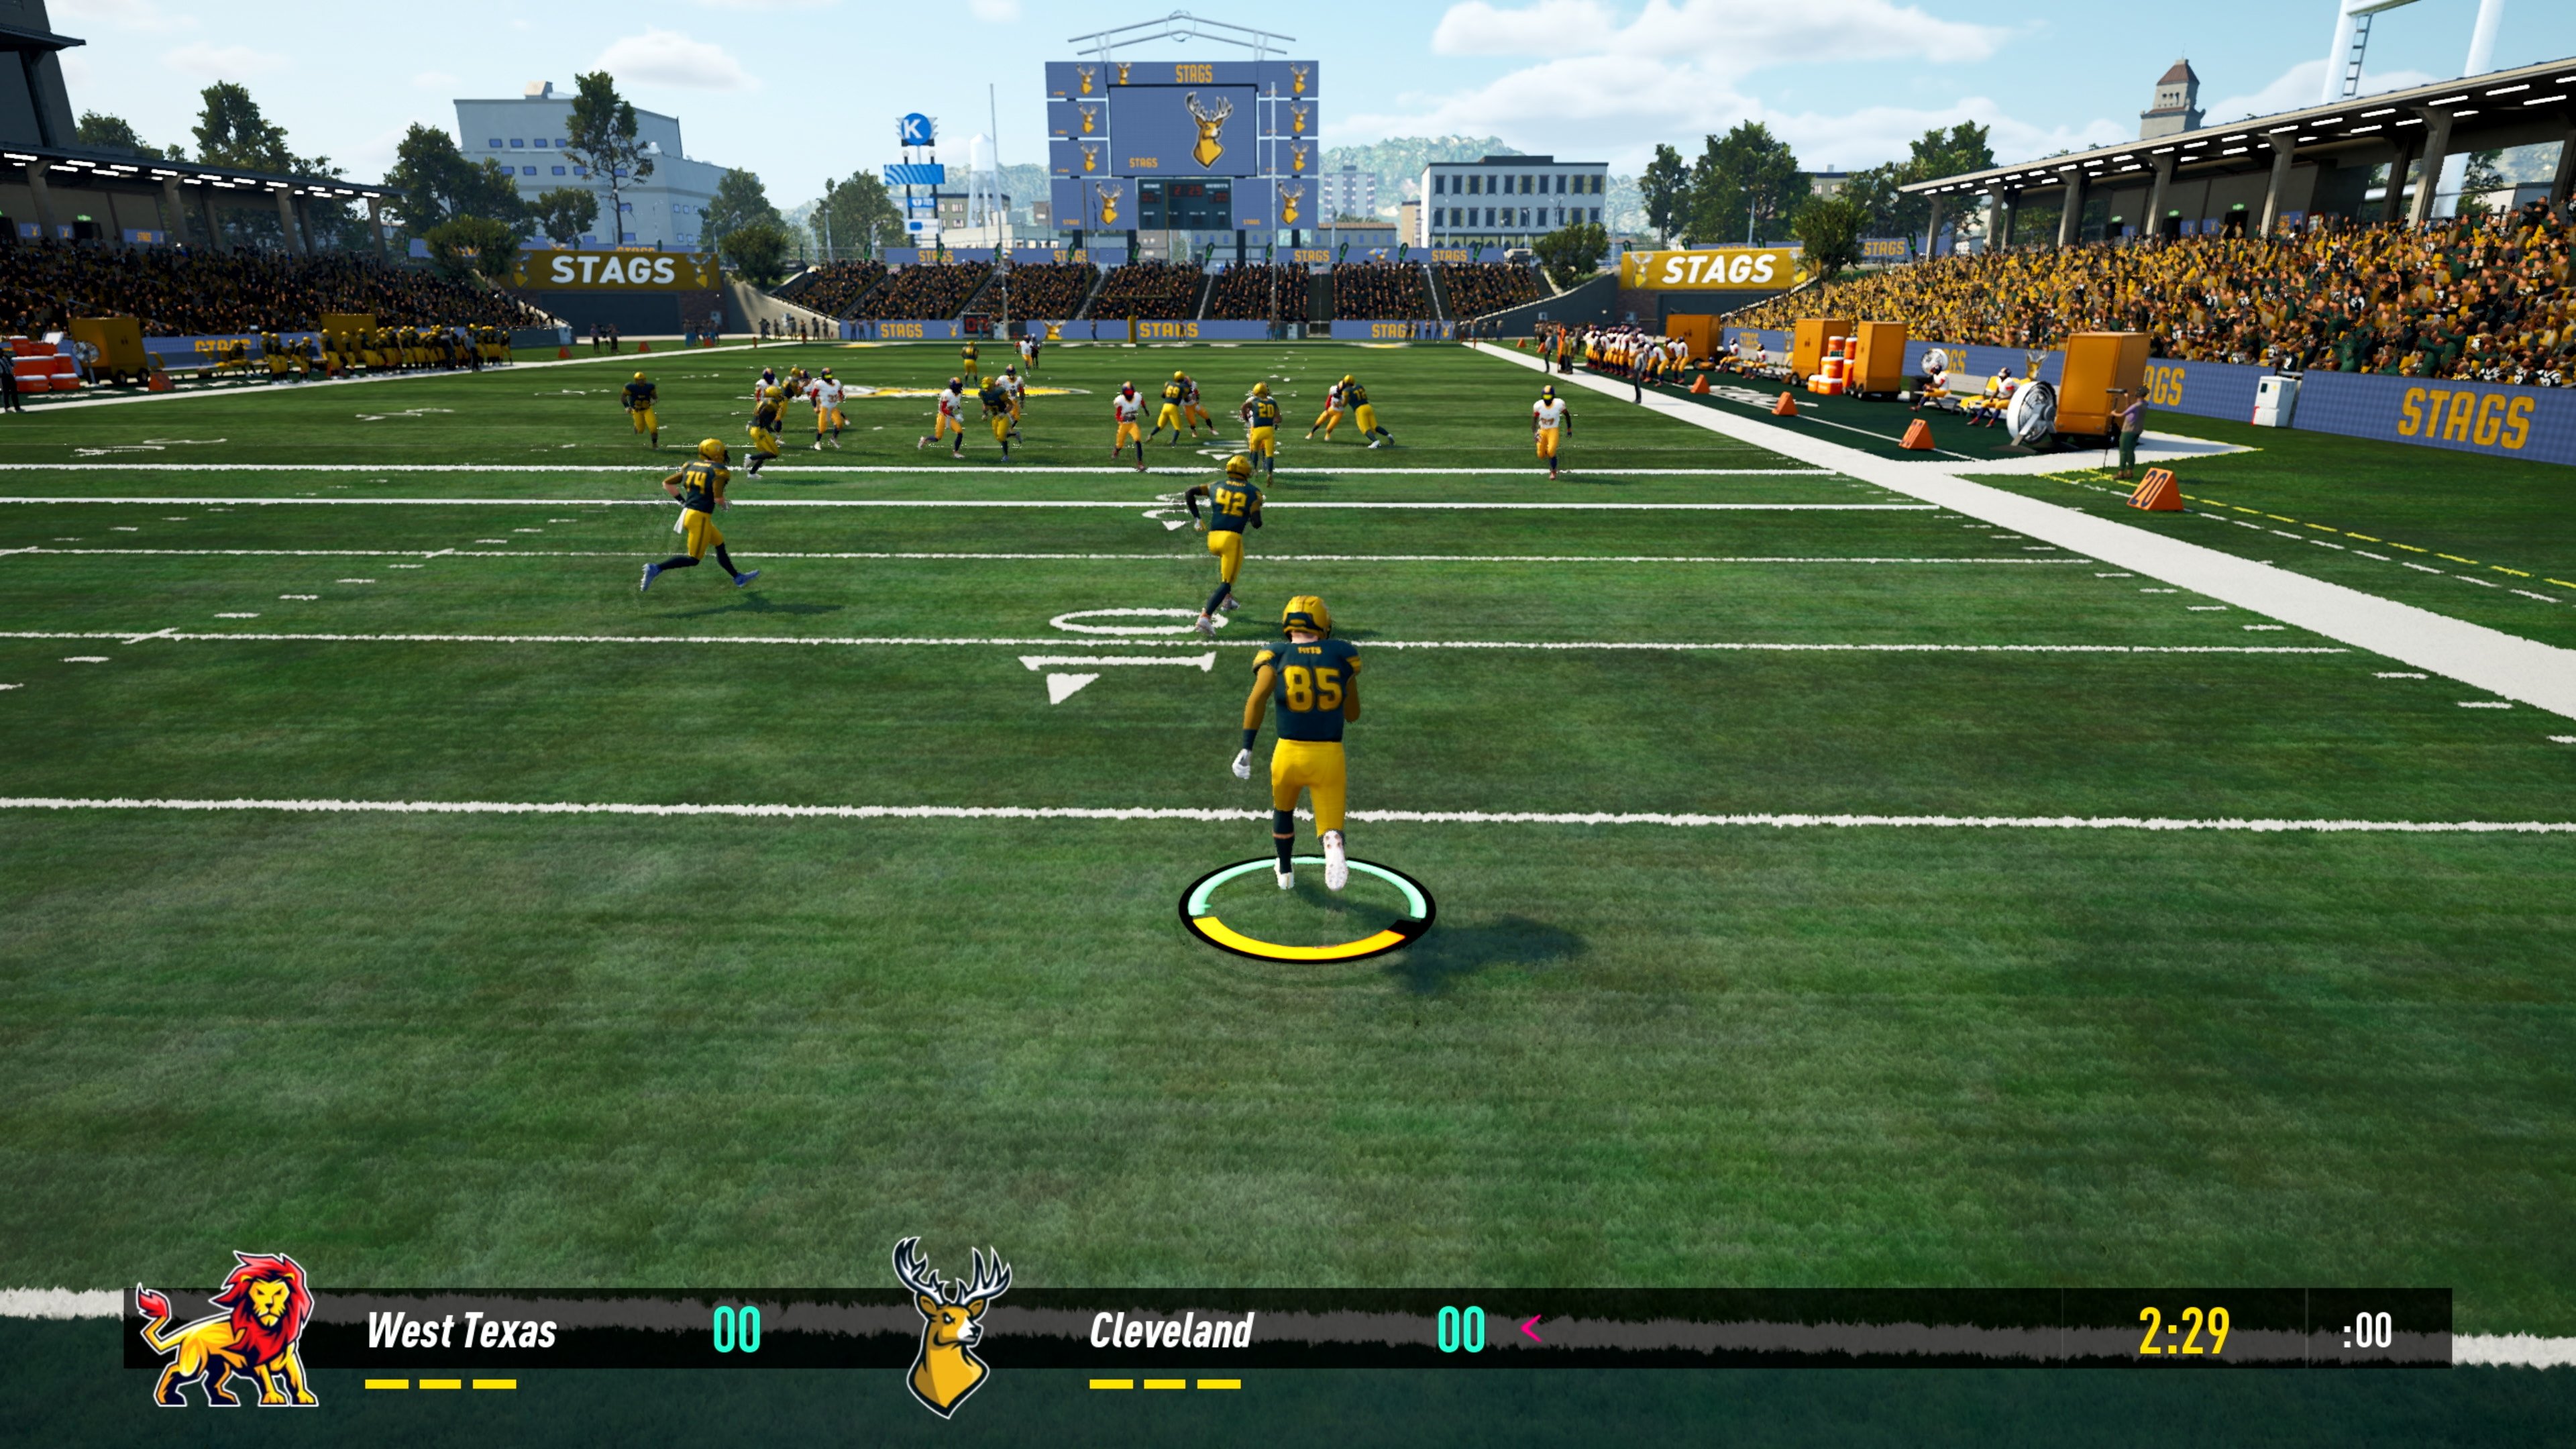 Freetoplay football simulation game Maximum Football announced for